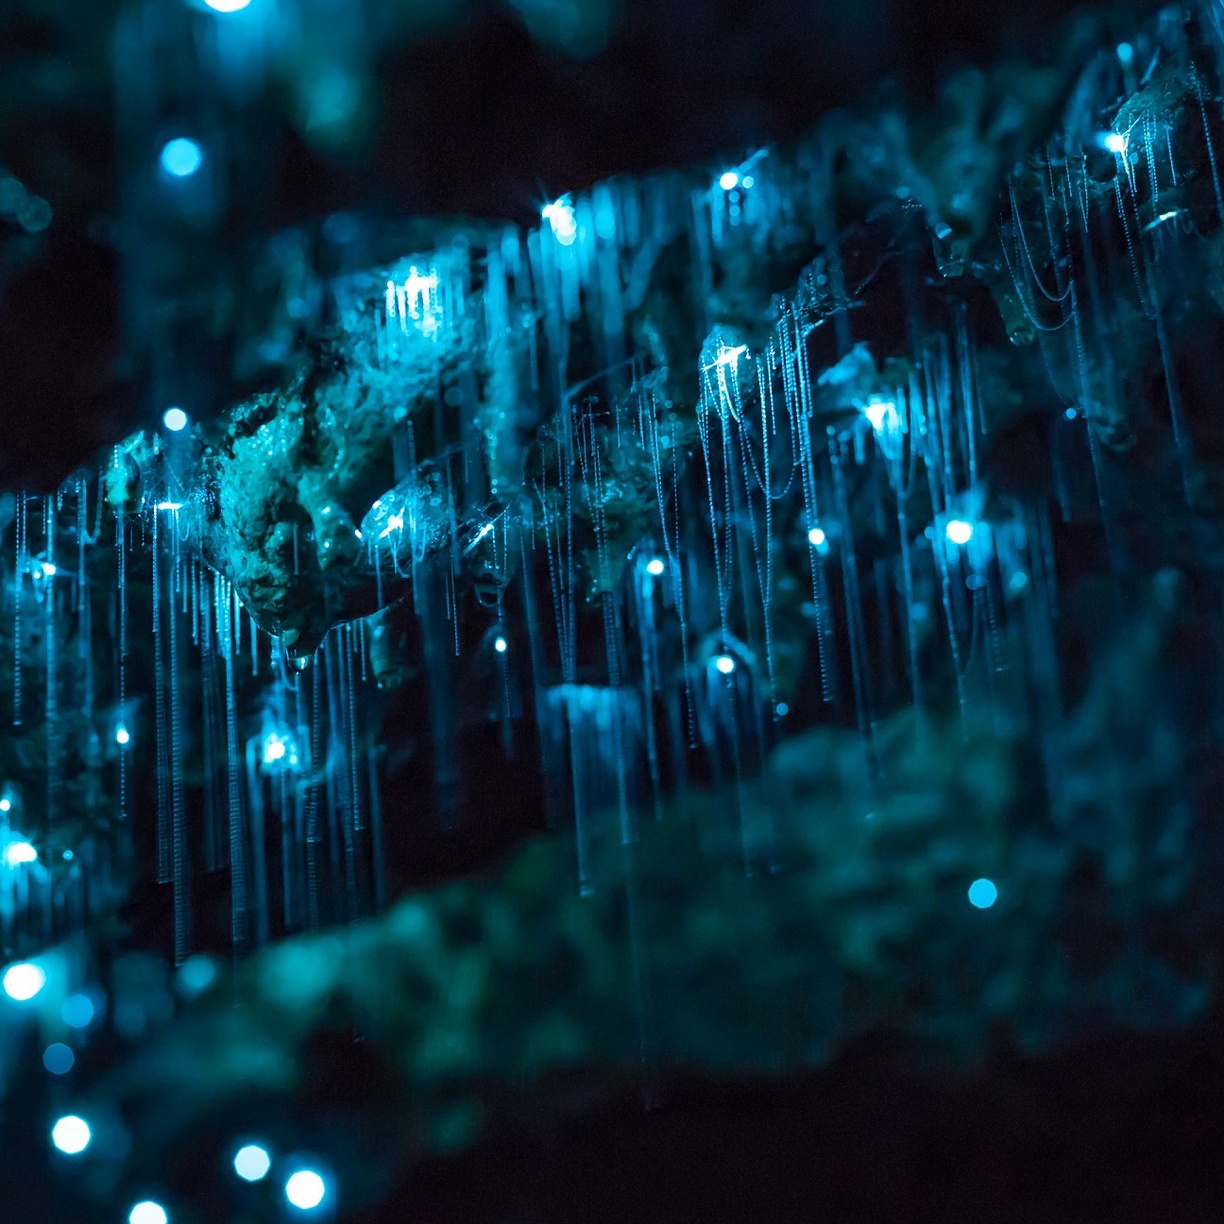 New Zealand glow worm caves